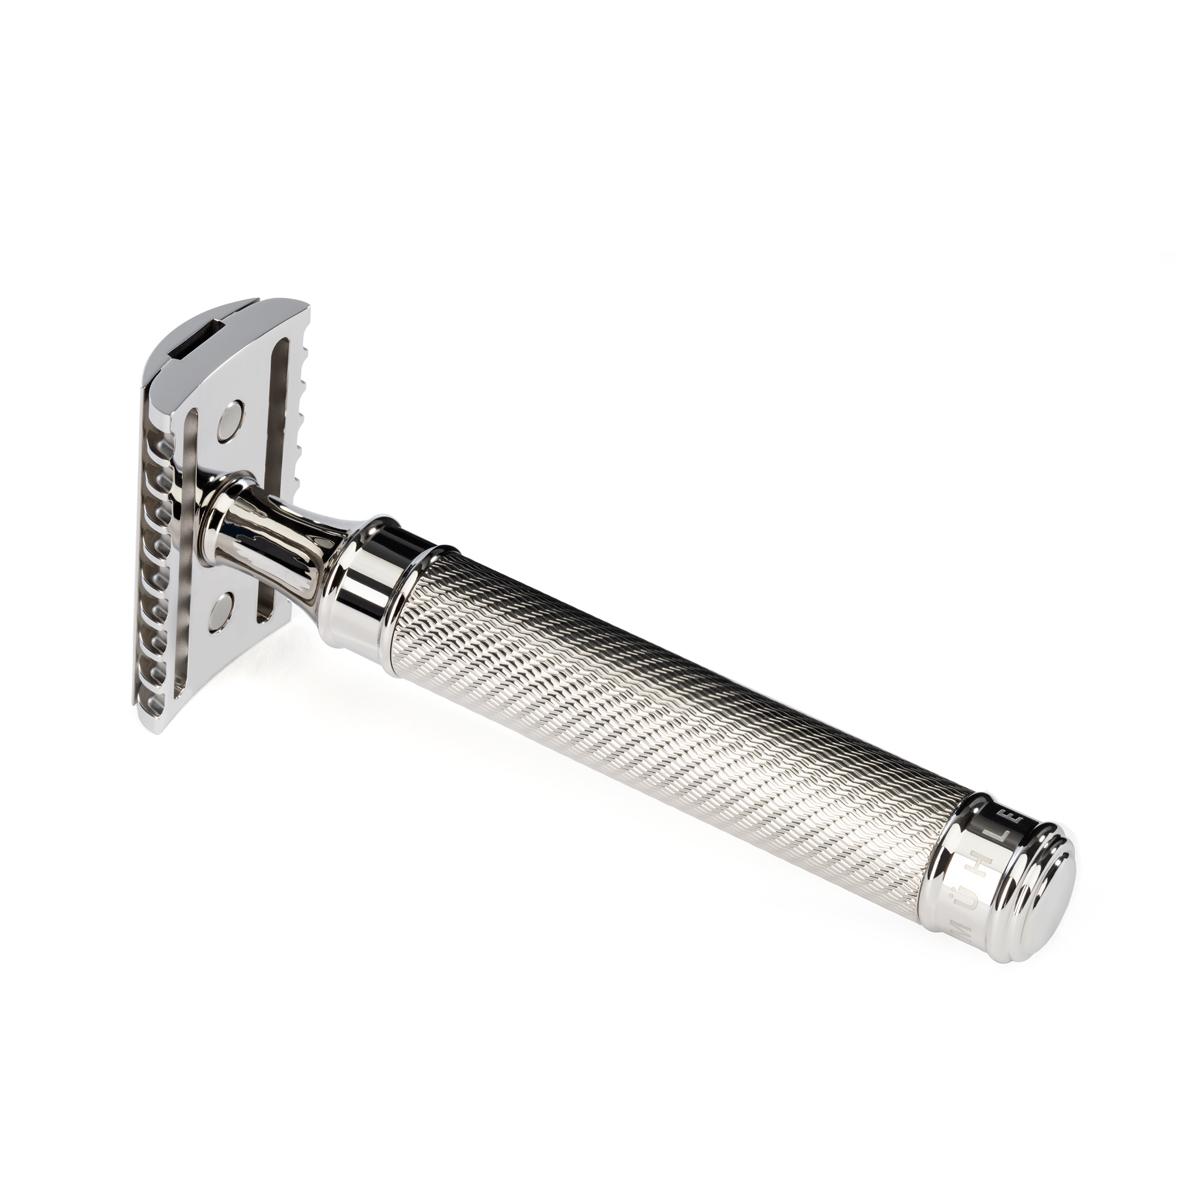 R41GS stainless steel razor